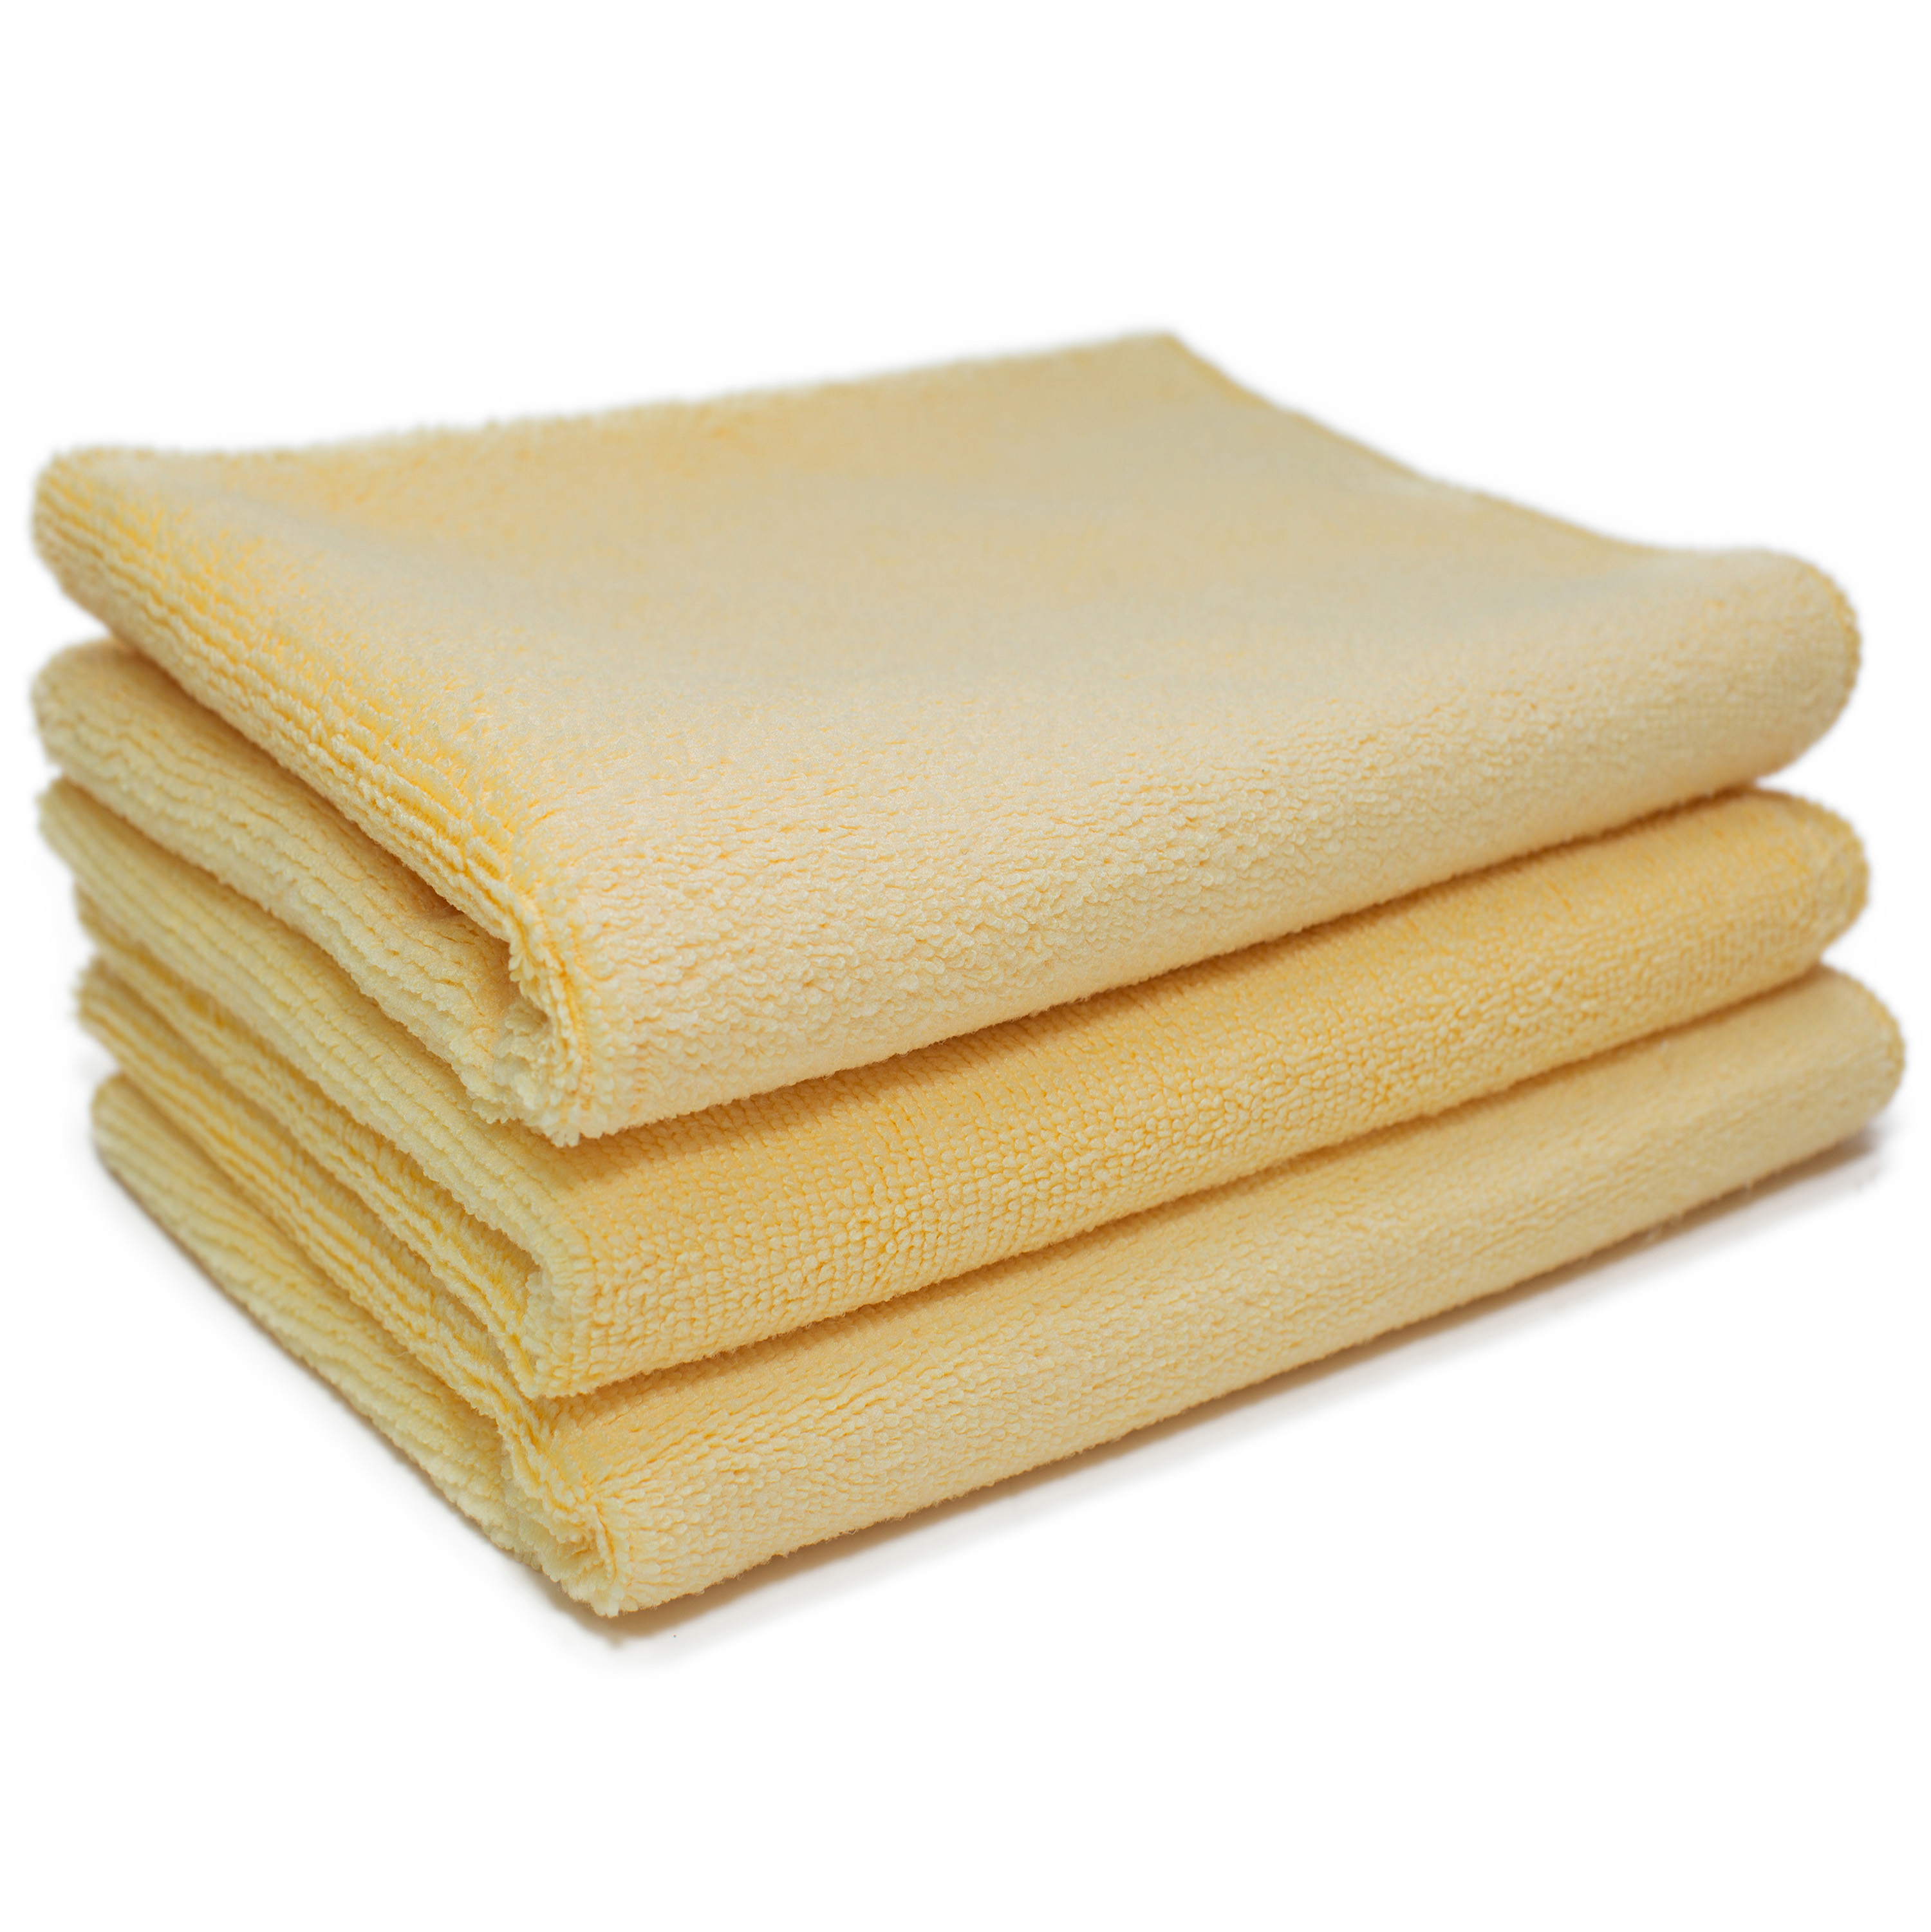 Meguiar's Supreme Shine Microfiber Towels, X2020, Pack of 3 - image 3 of 11